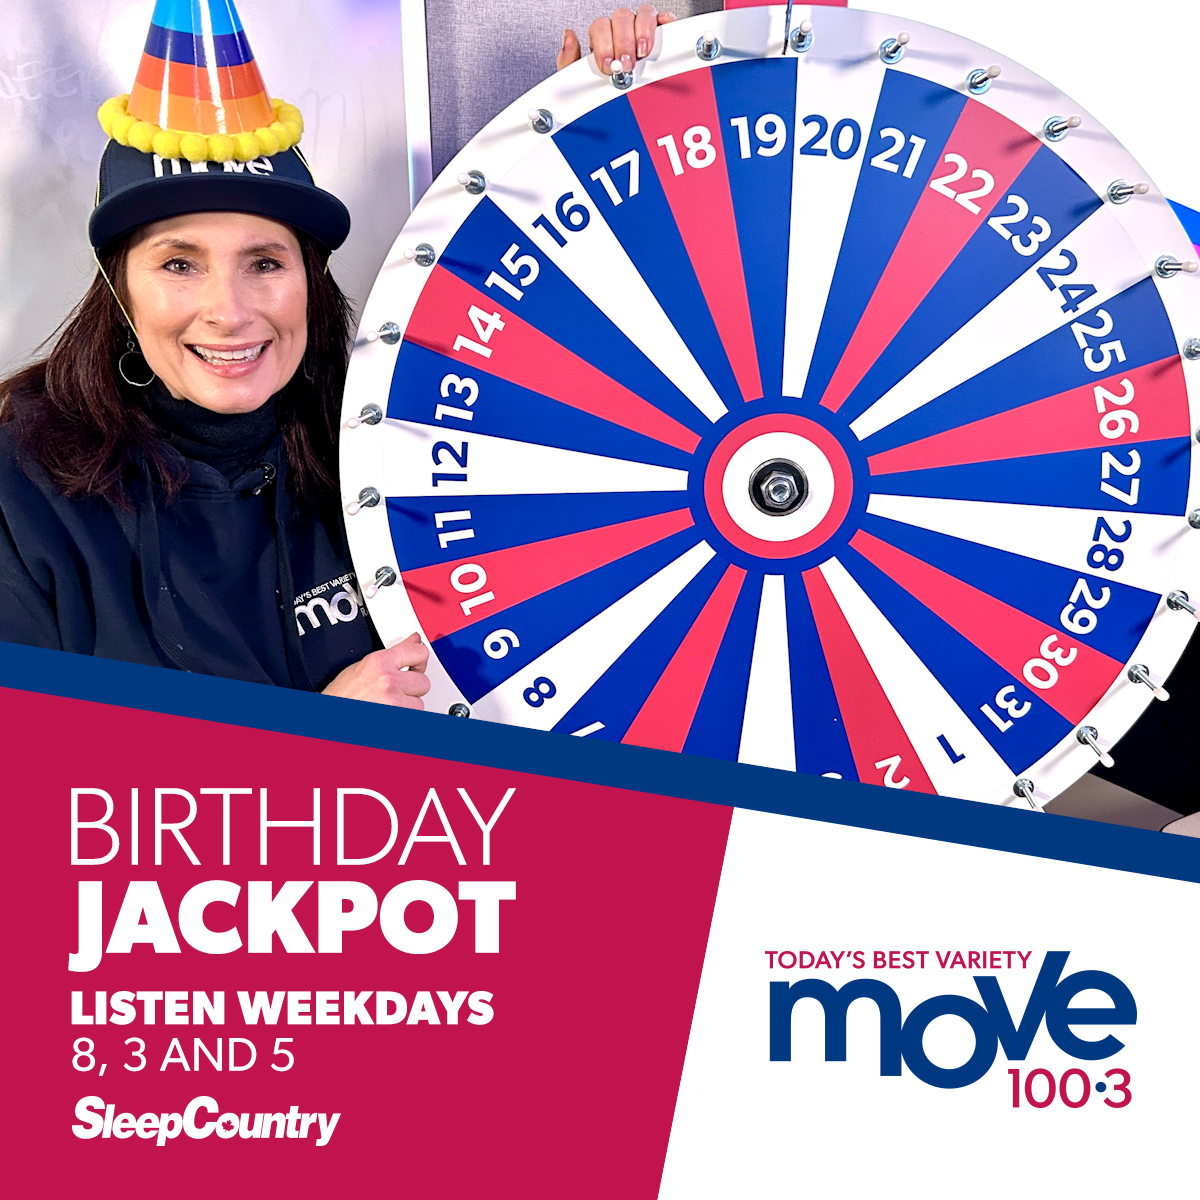 Veronique Shank WINS $5,000 In MOVE 100's Birthday Jackpot!